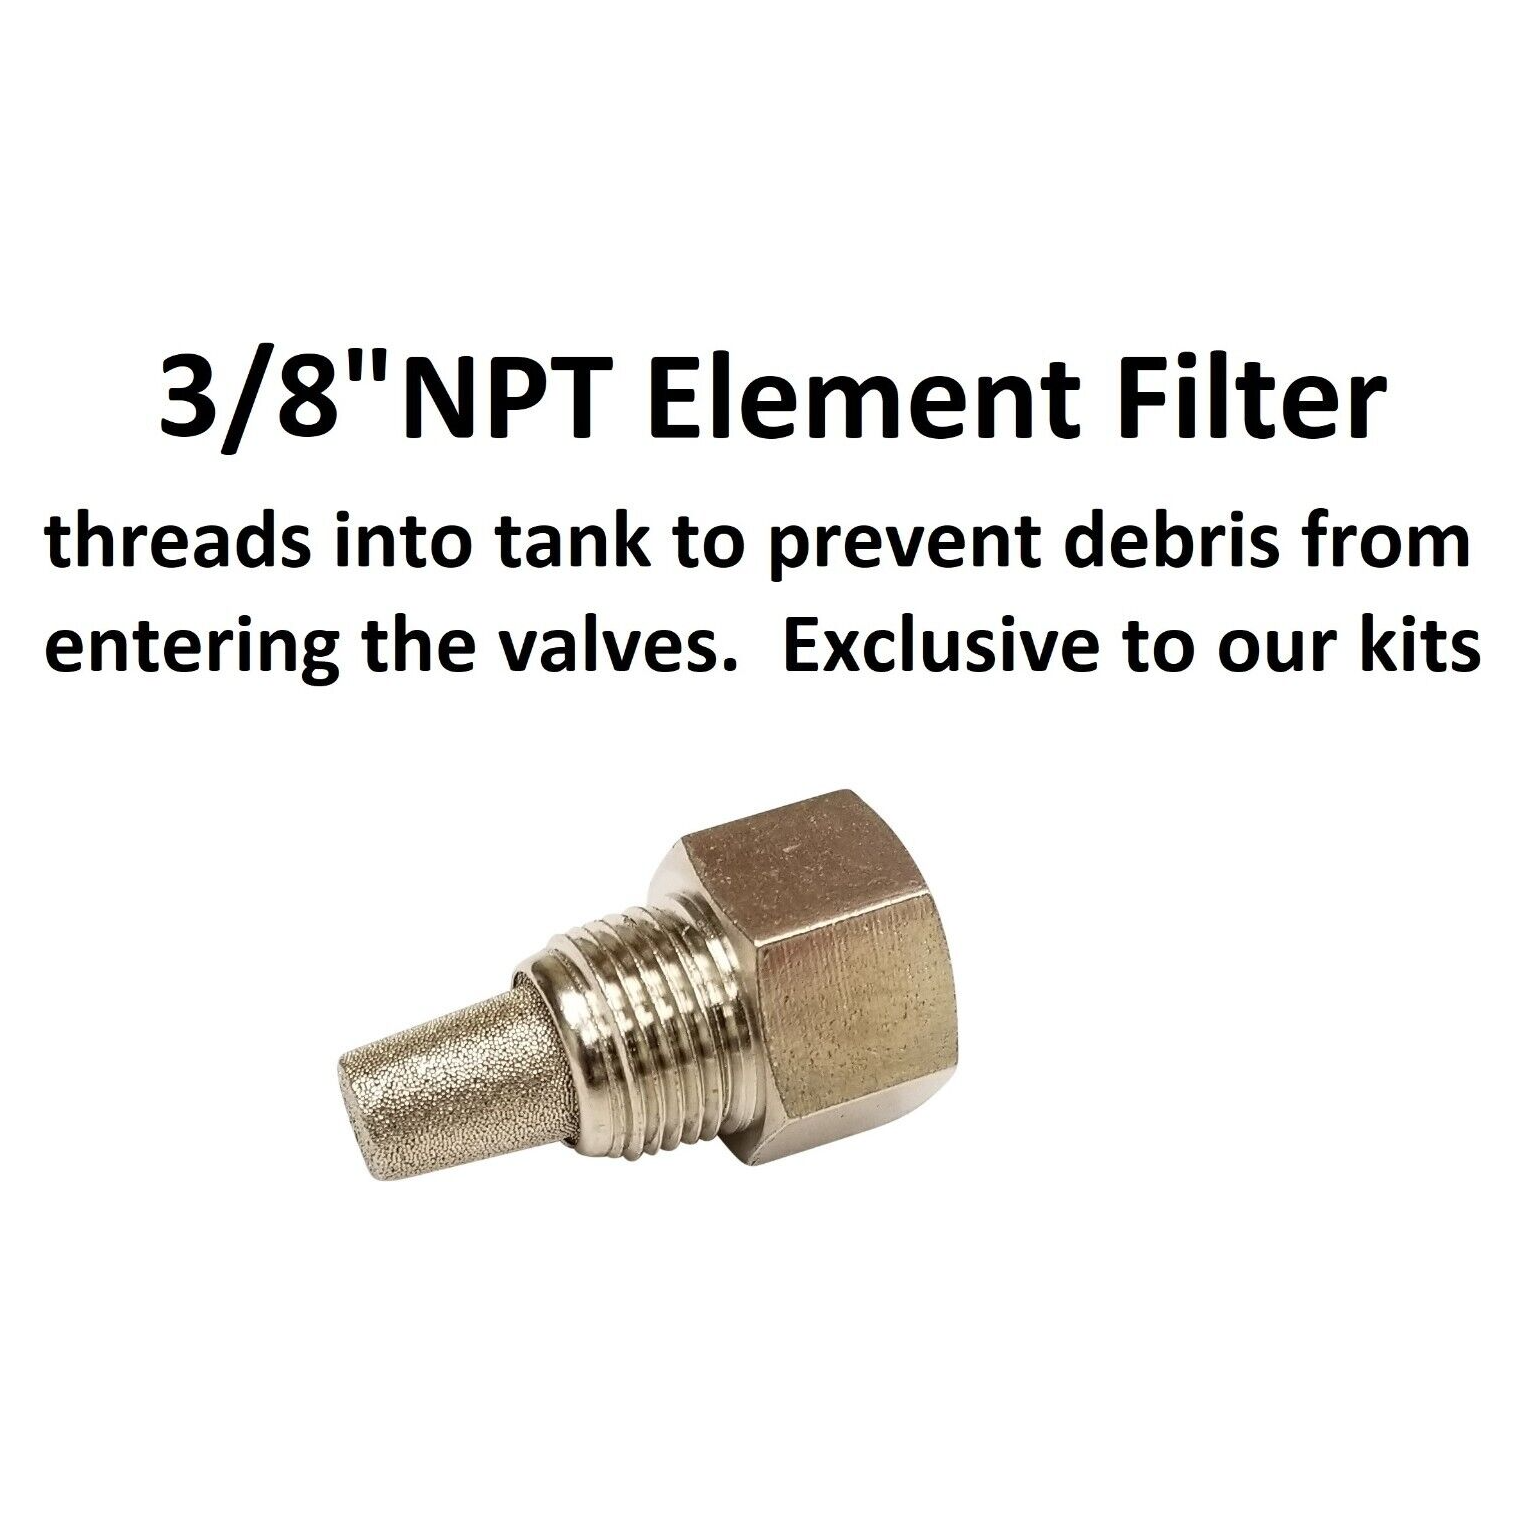 NPT element filter